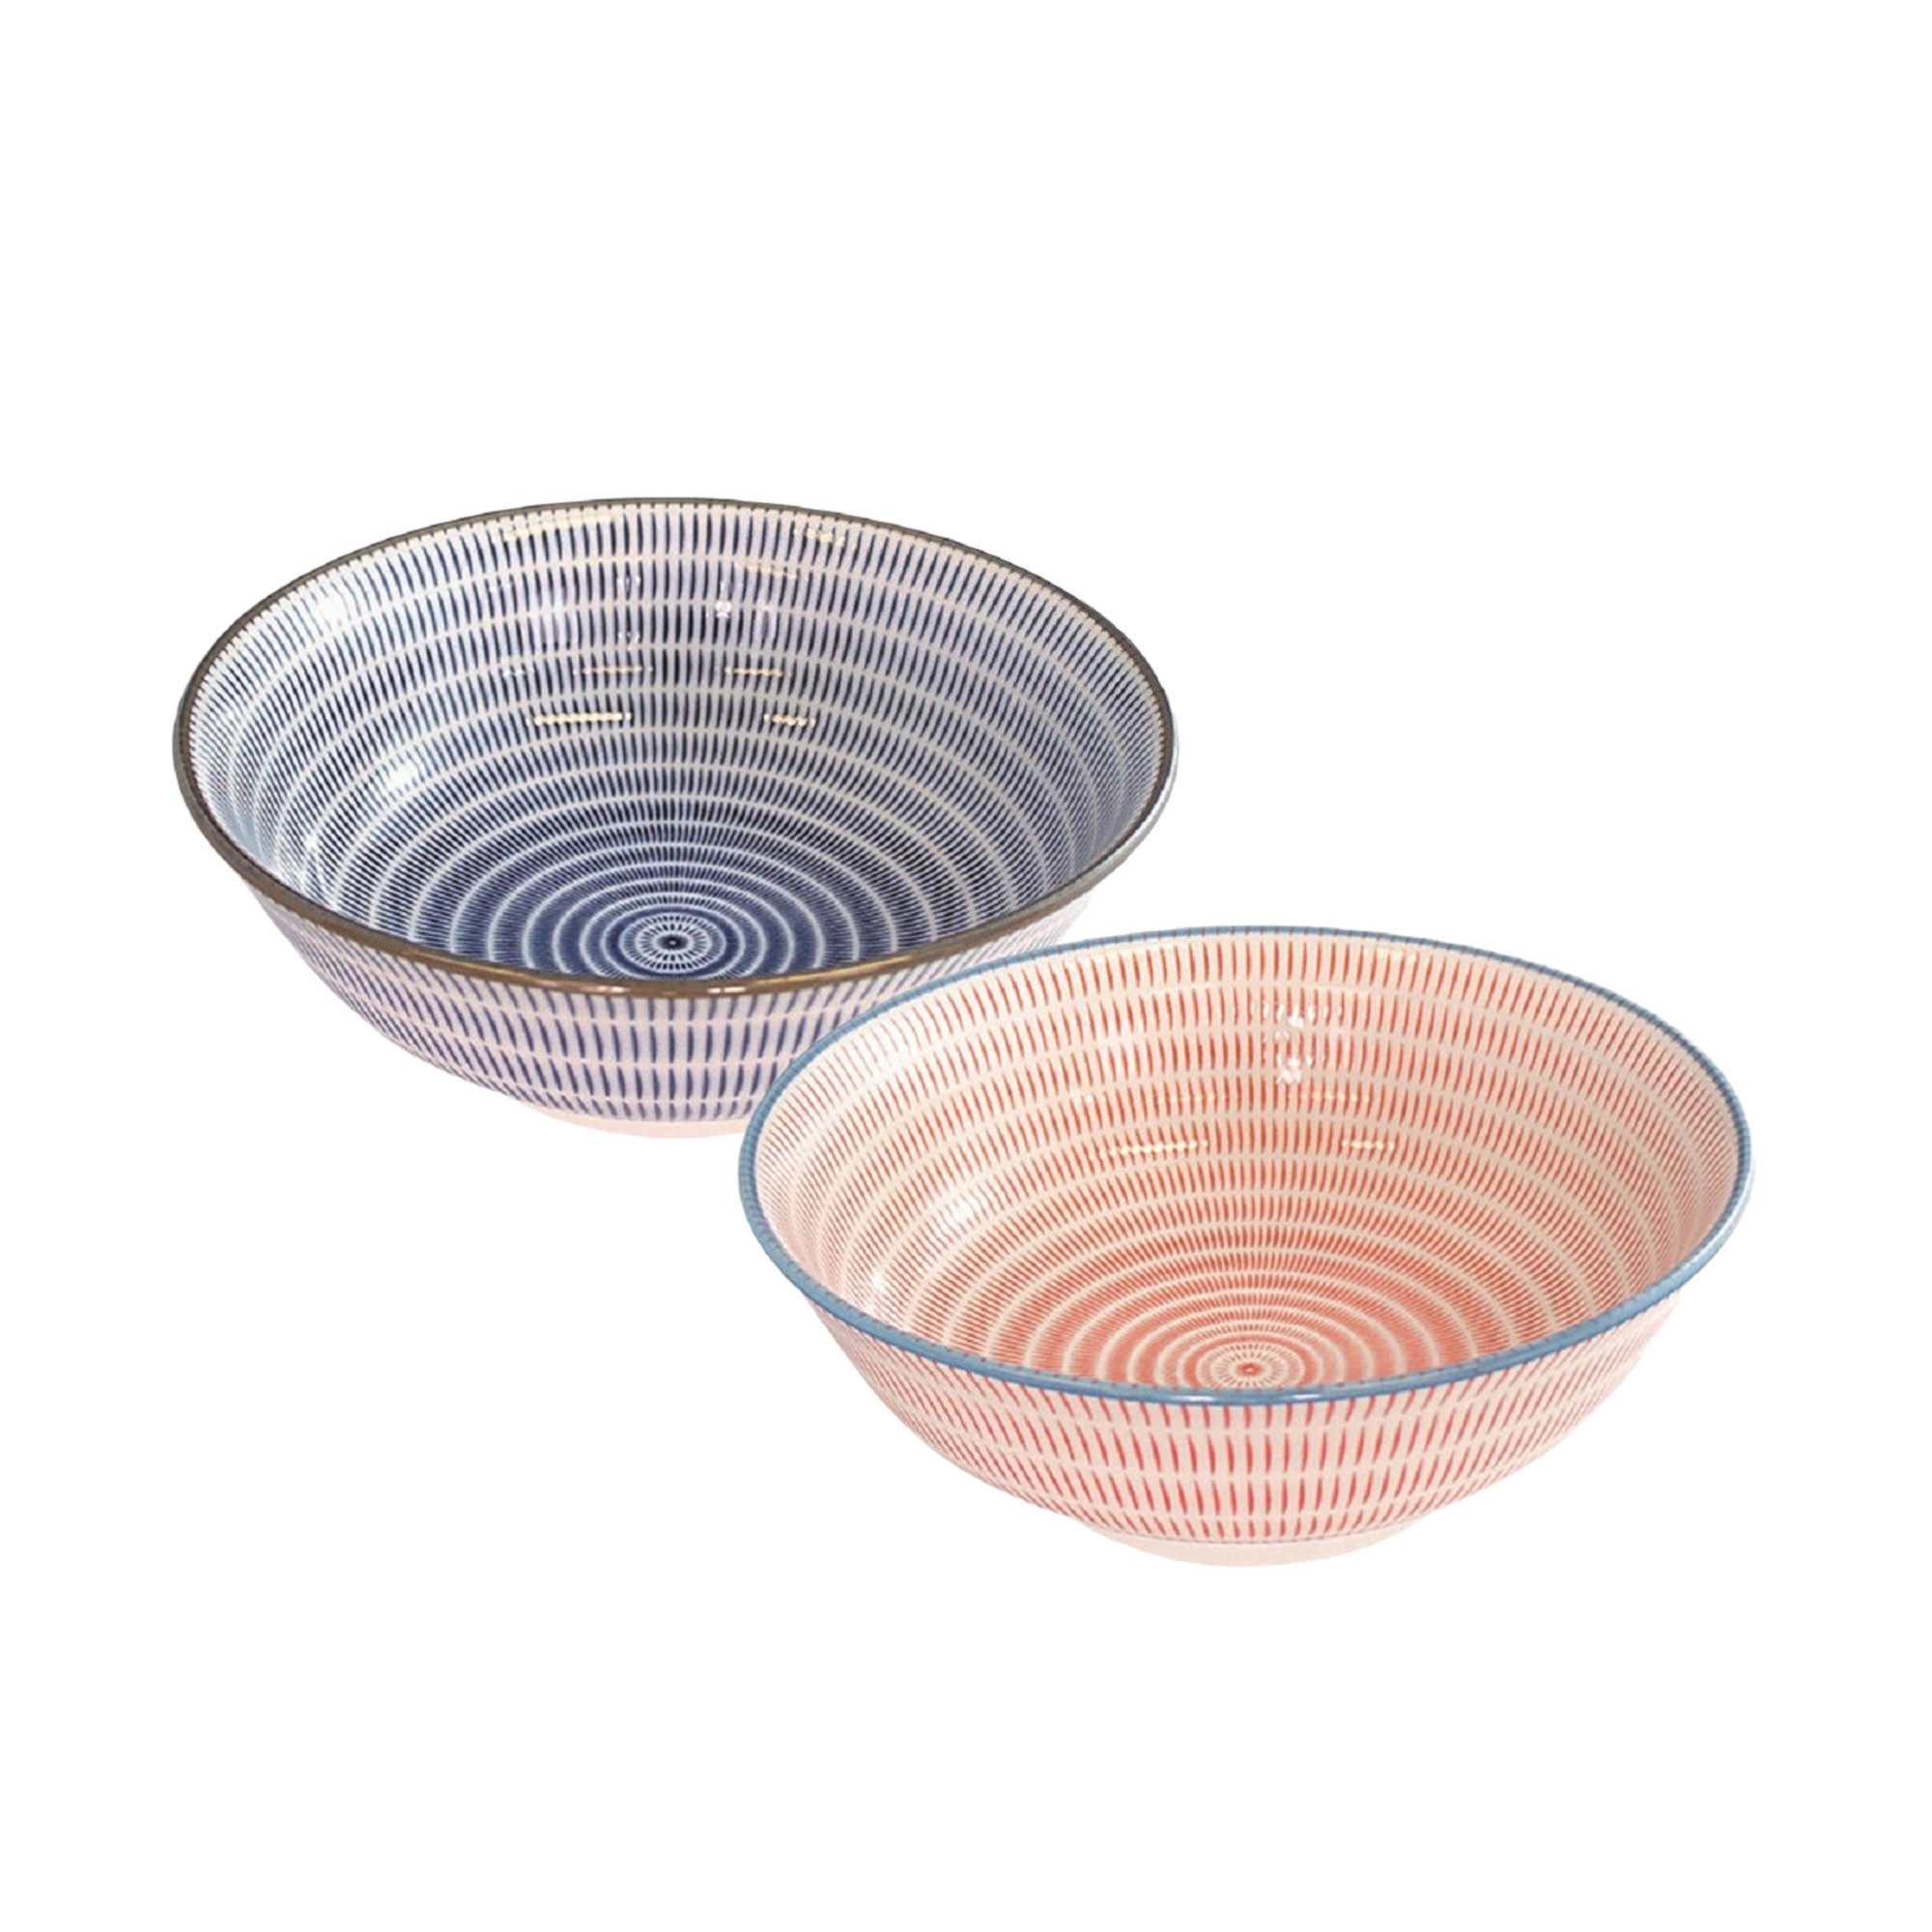 Japanese Collection Oka Ceramic Bowl Set of 2 Image 1